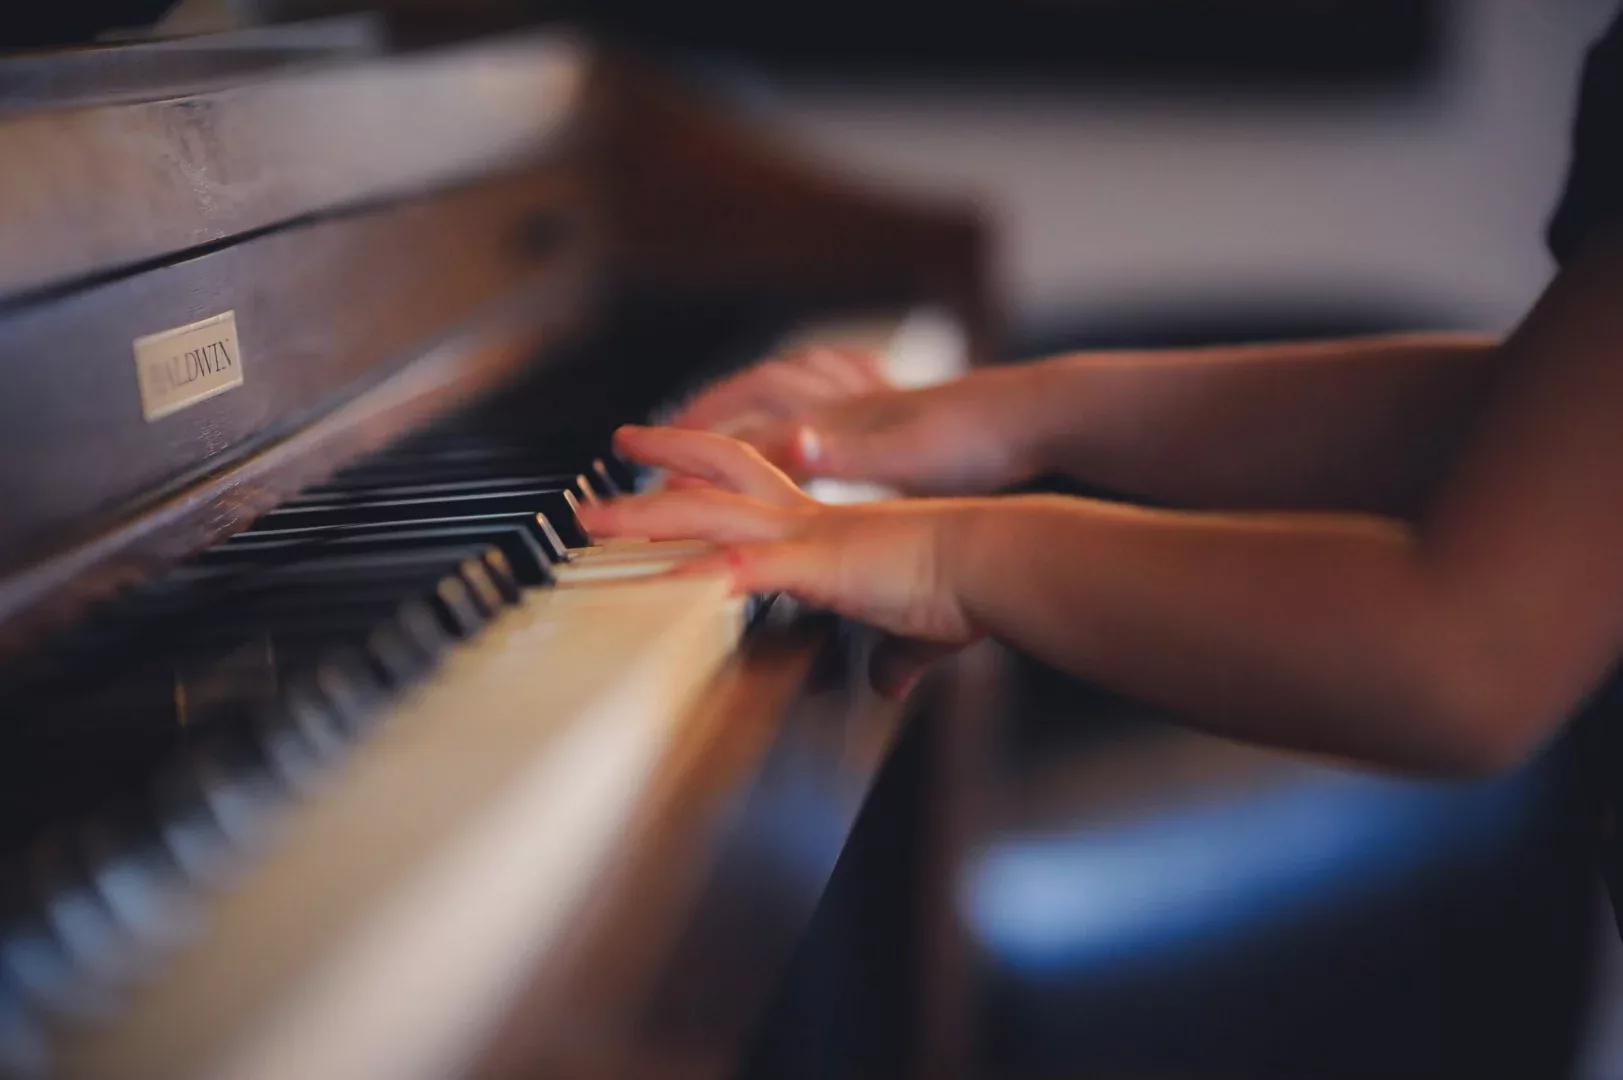 Child's hands on upright piano keys